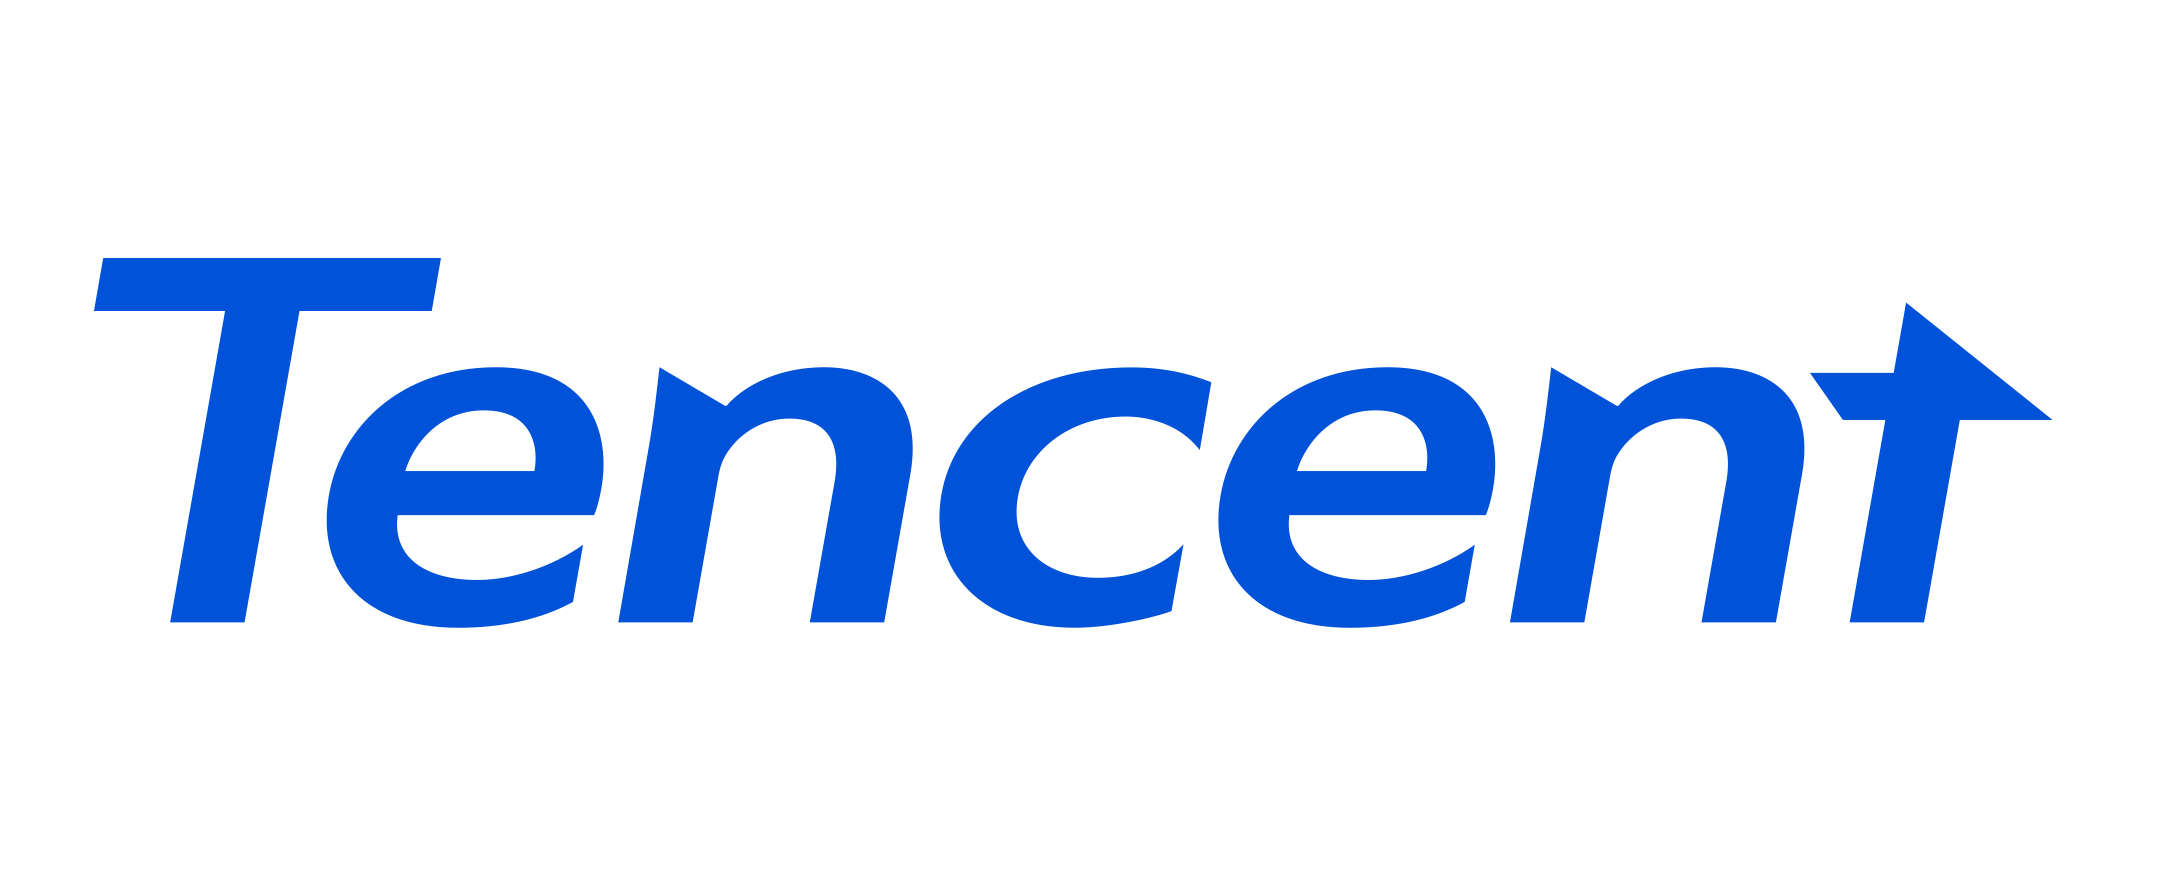 Tencent English logo